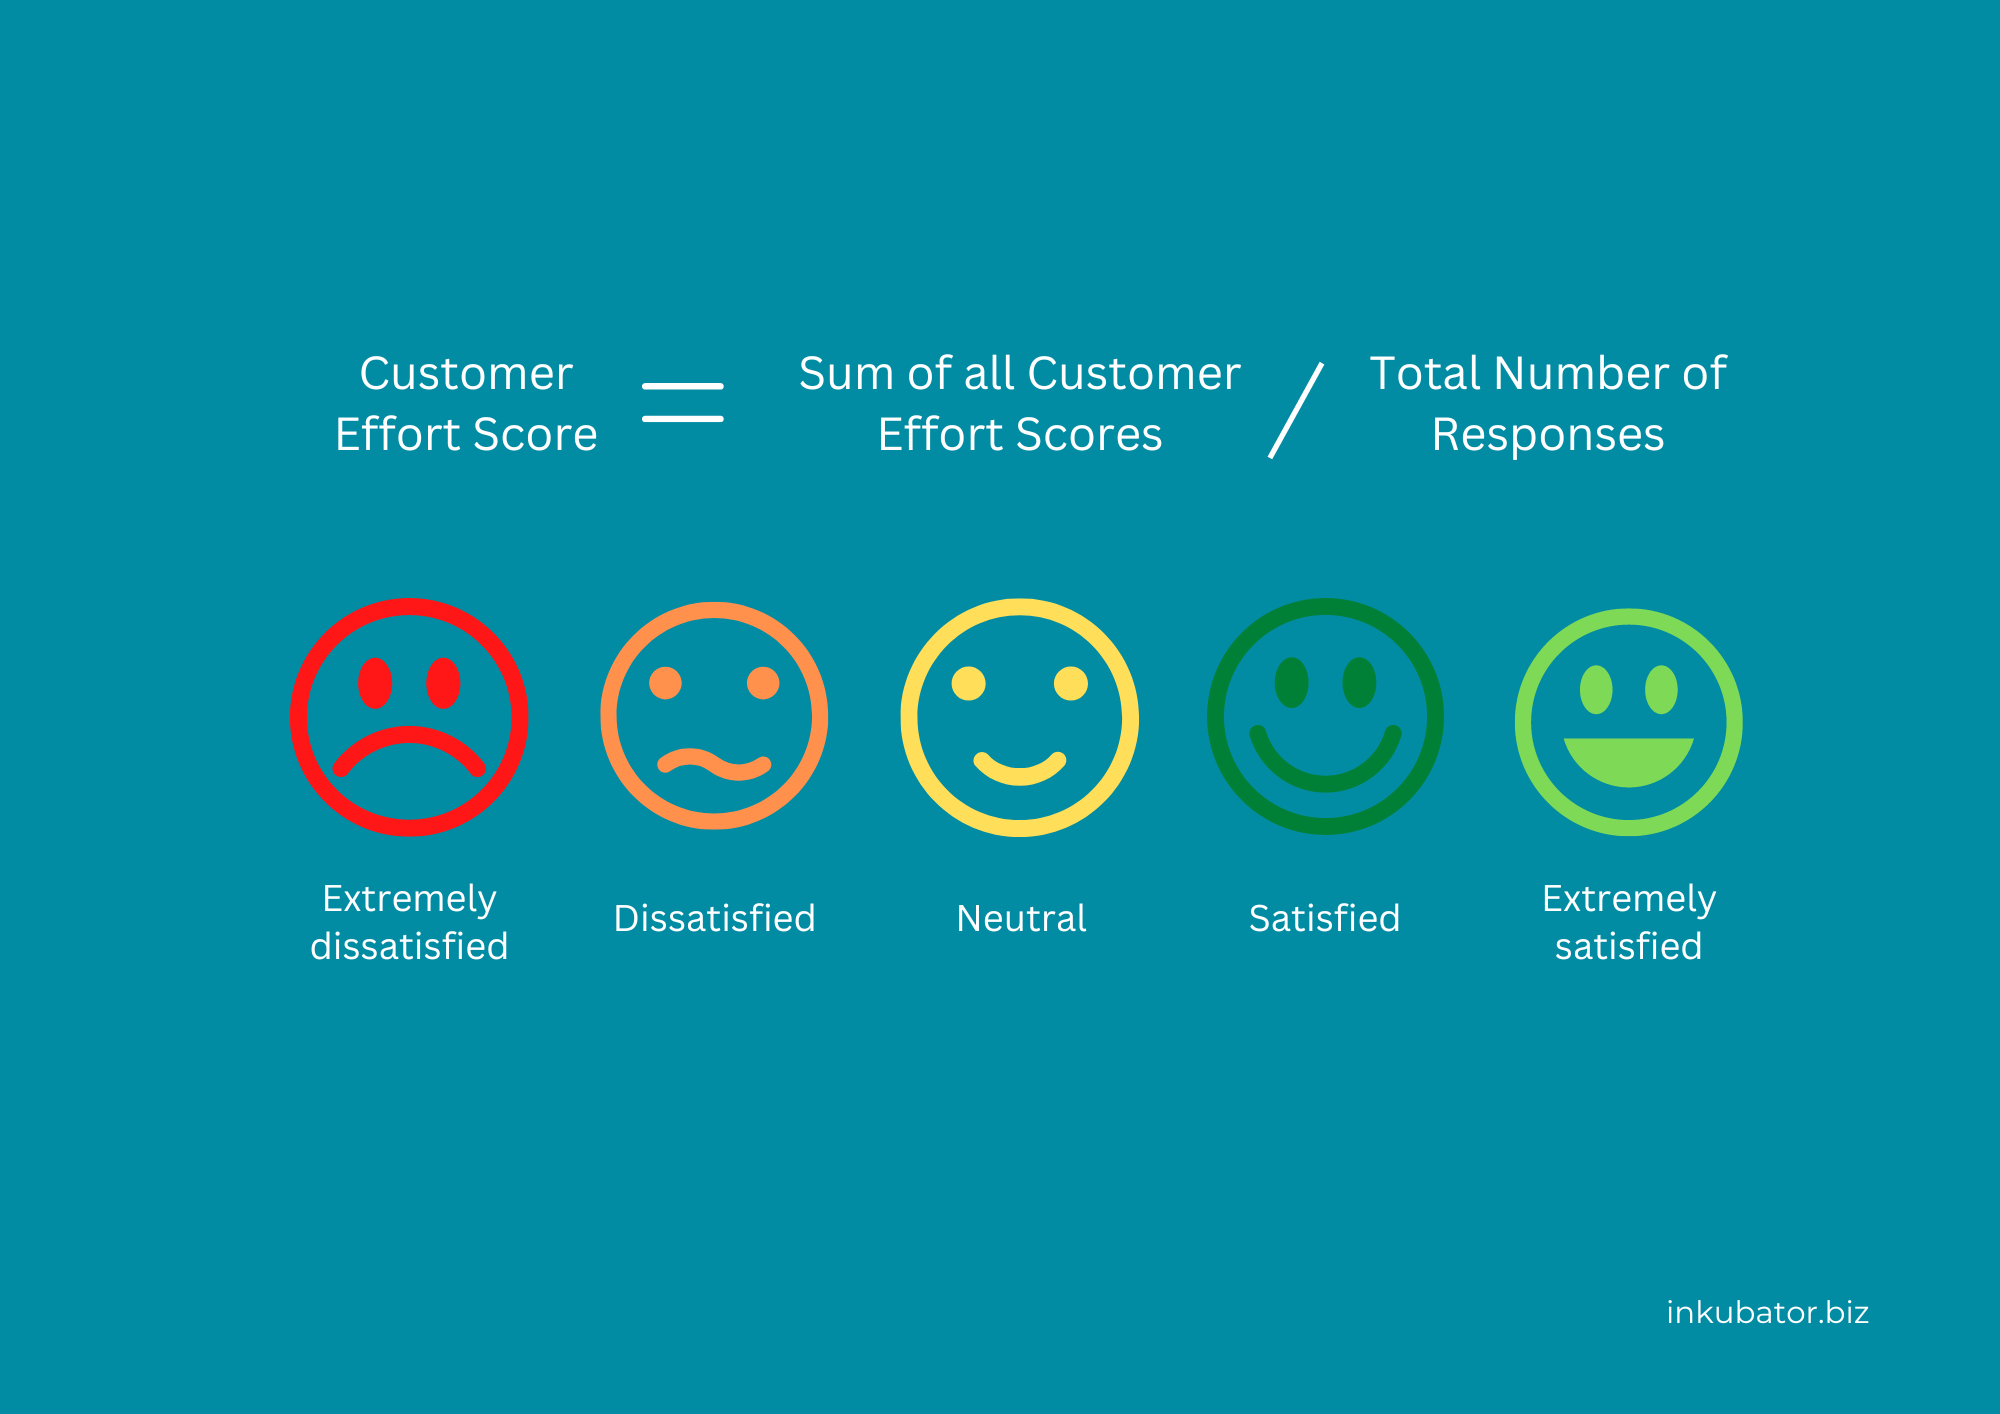 Customer efforts score